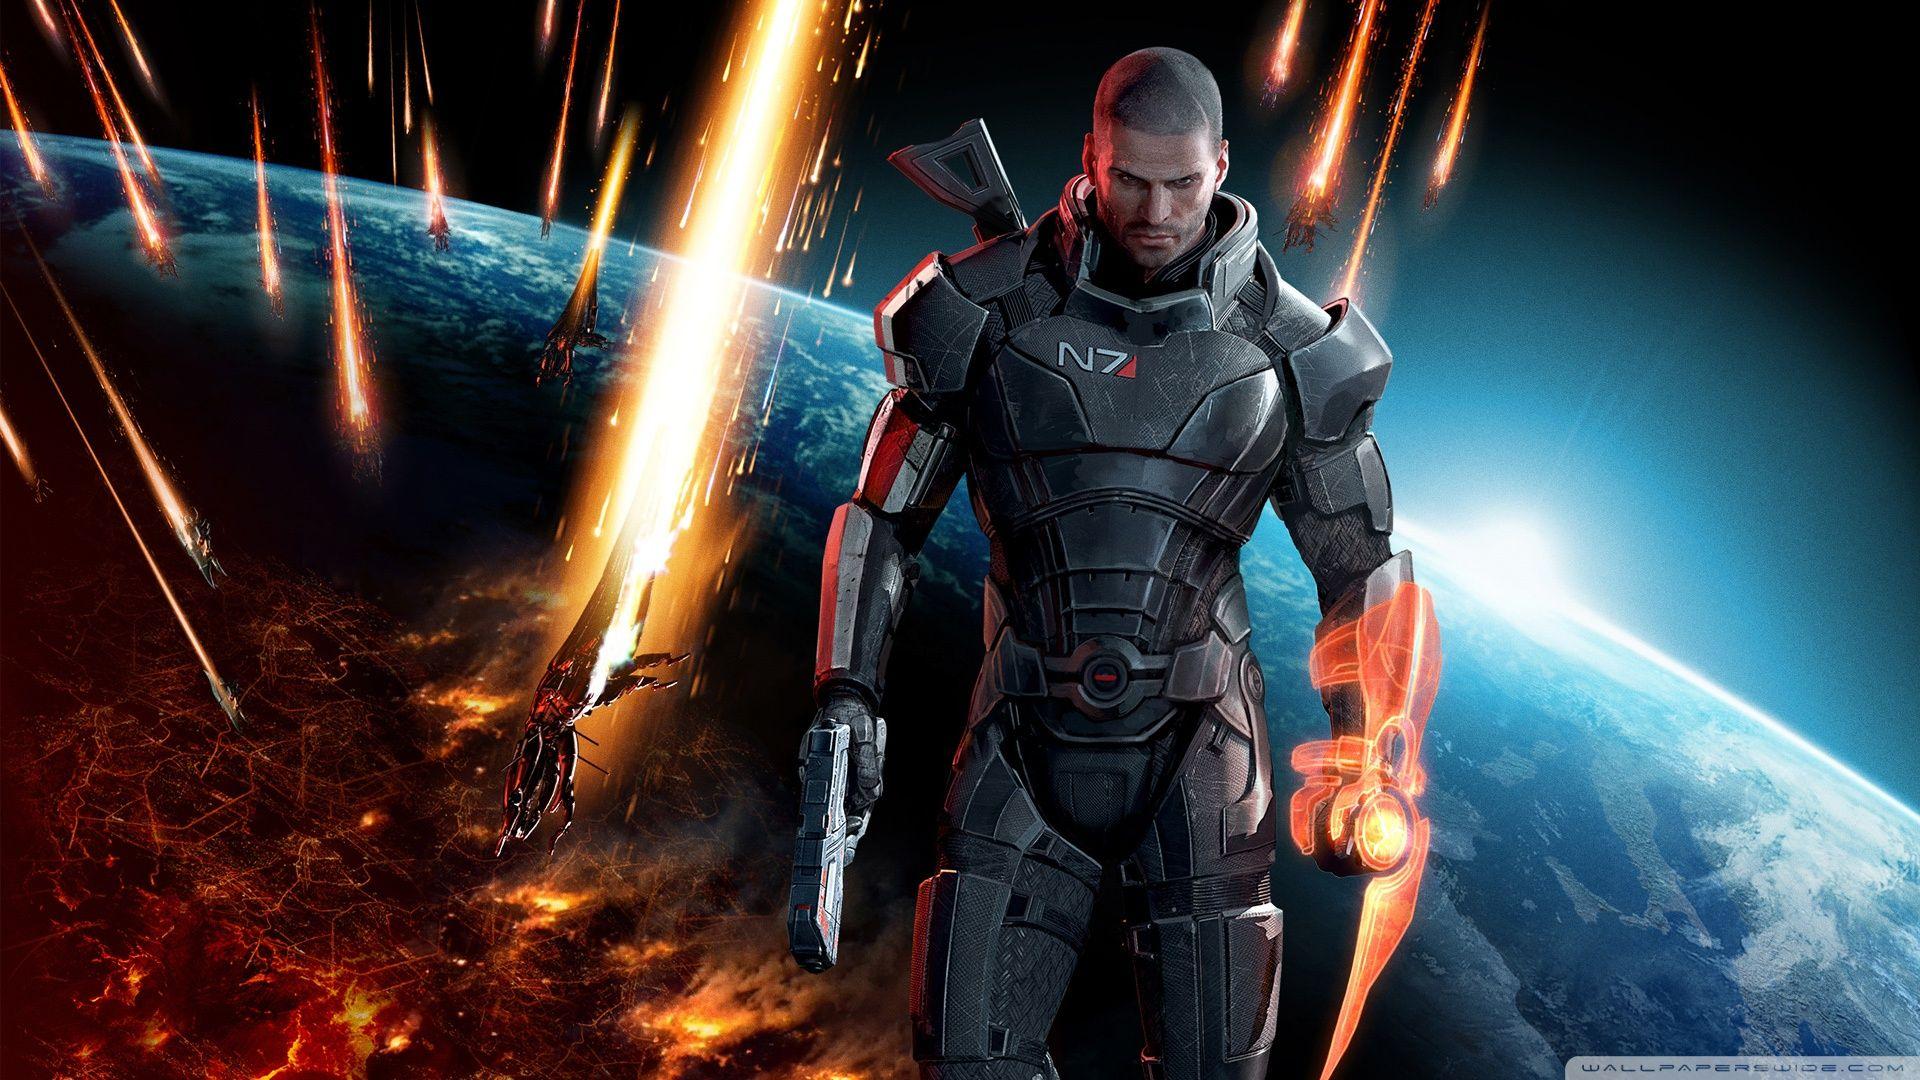 Mass Effect ❤ 4K HD Desktop Wallpaper for 4K Ultra HD TV • Wide